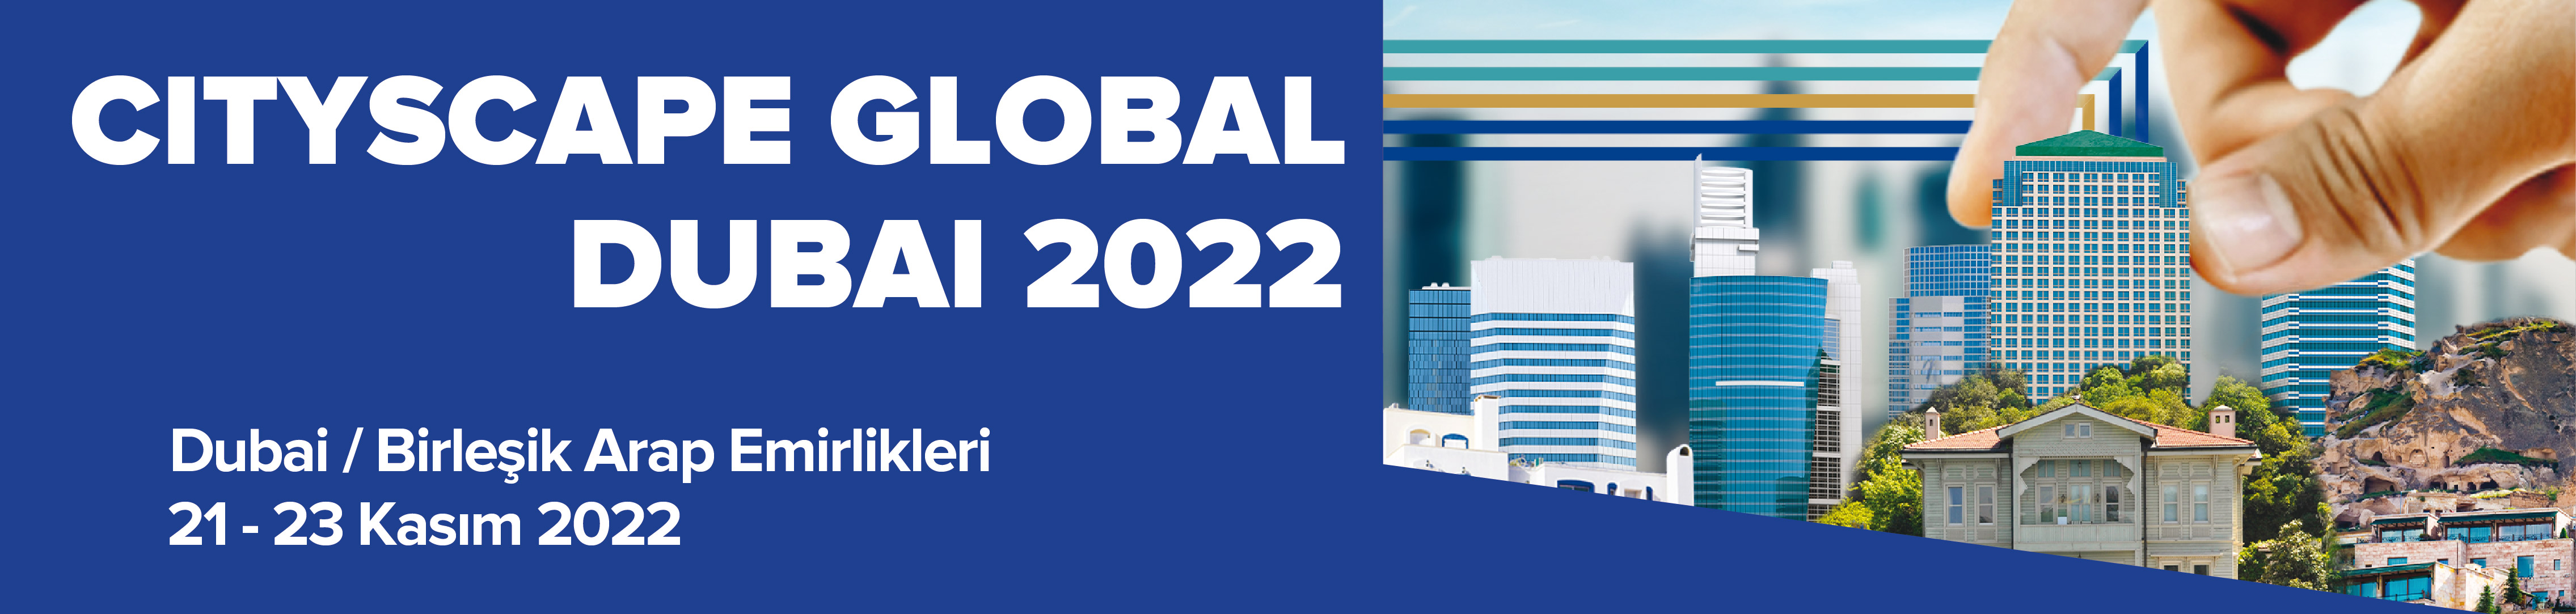 CITYSCAPE GLOBAL DUBAI 2022